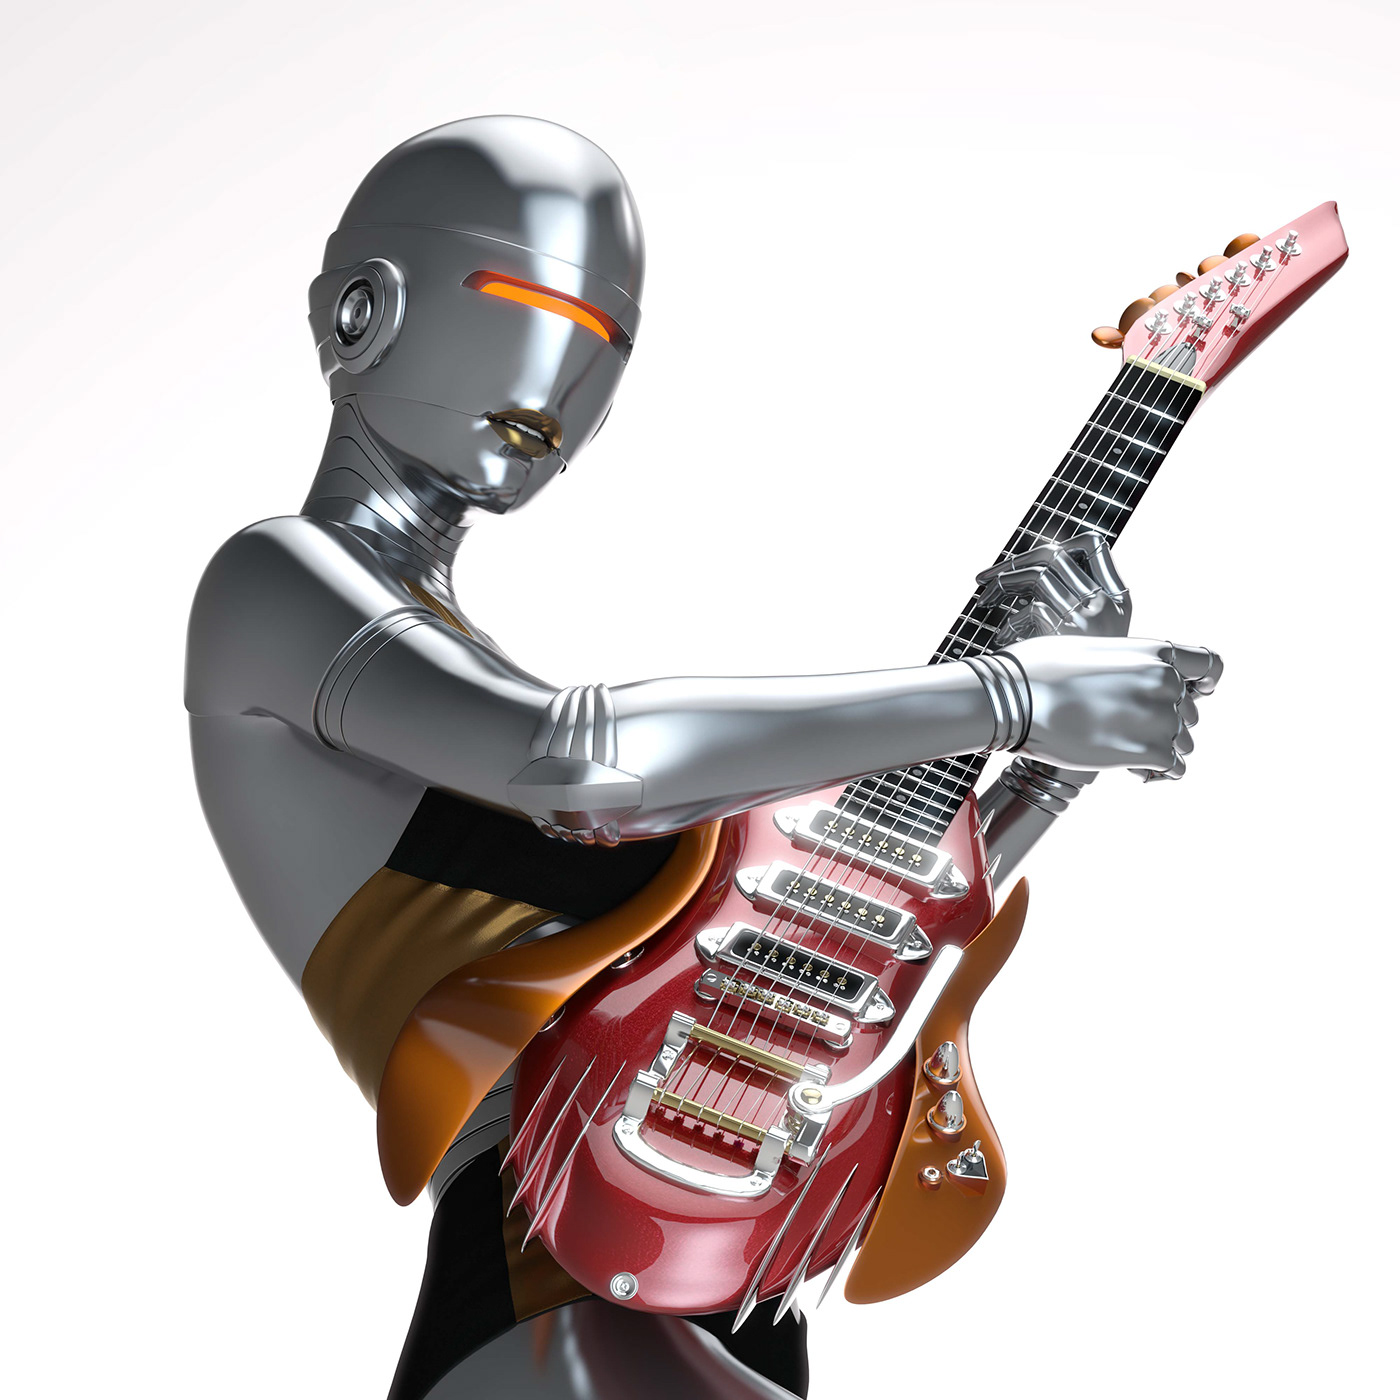 carlo molinari robot Sorayama chitarra guitar music